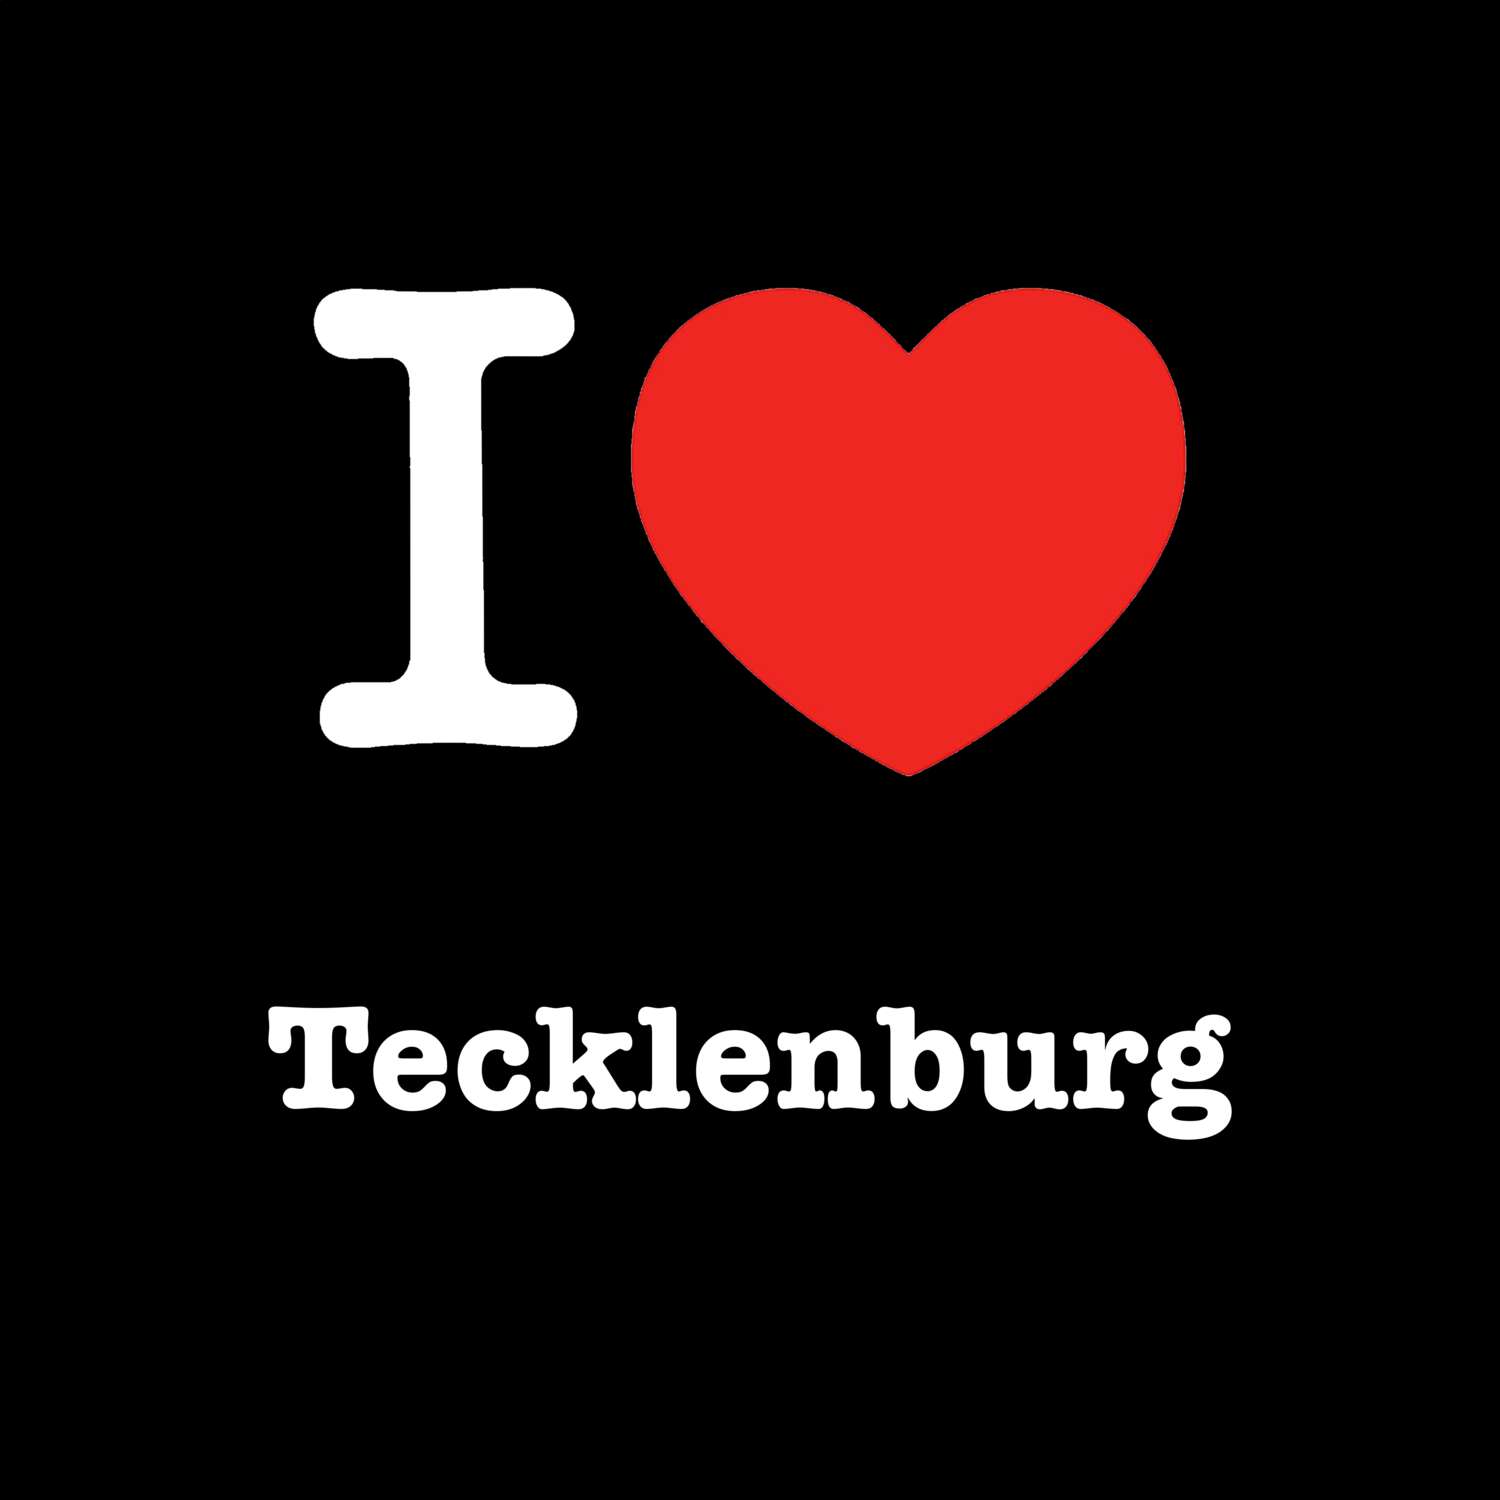 Tecklenburg T-Shirt »I love«